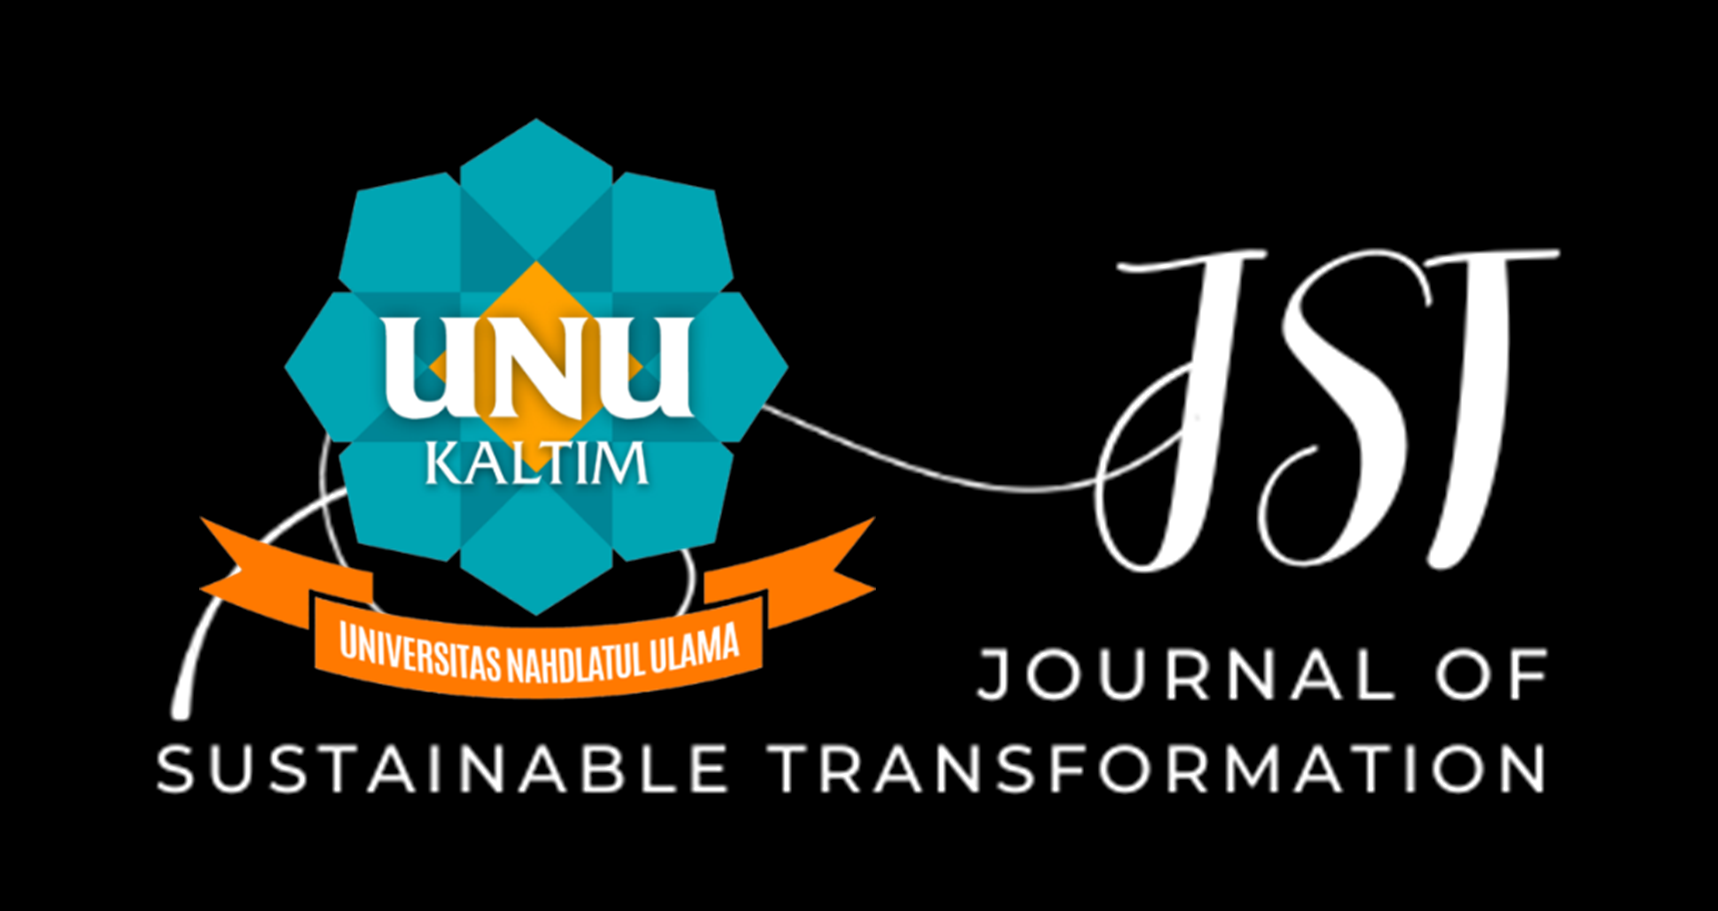 Published by: Universitas Nahdlatul Ulama Kalimantan Timur